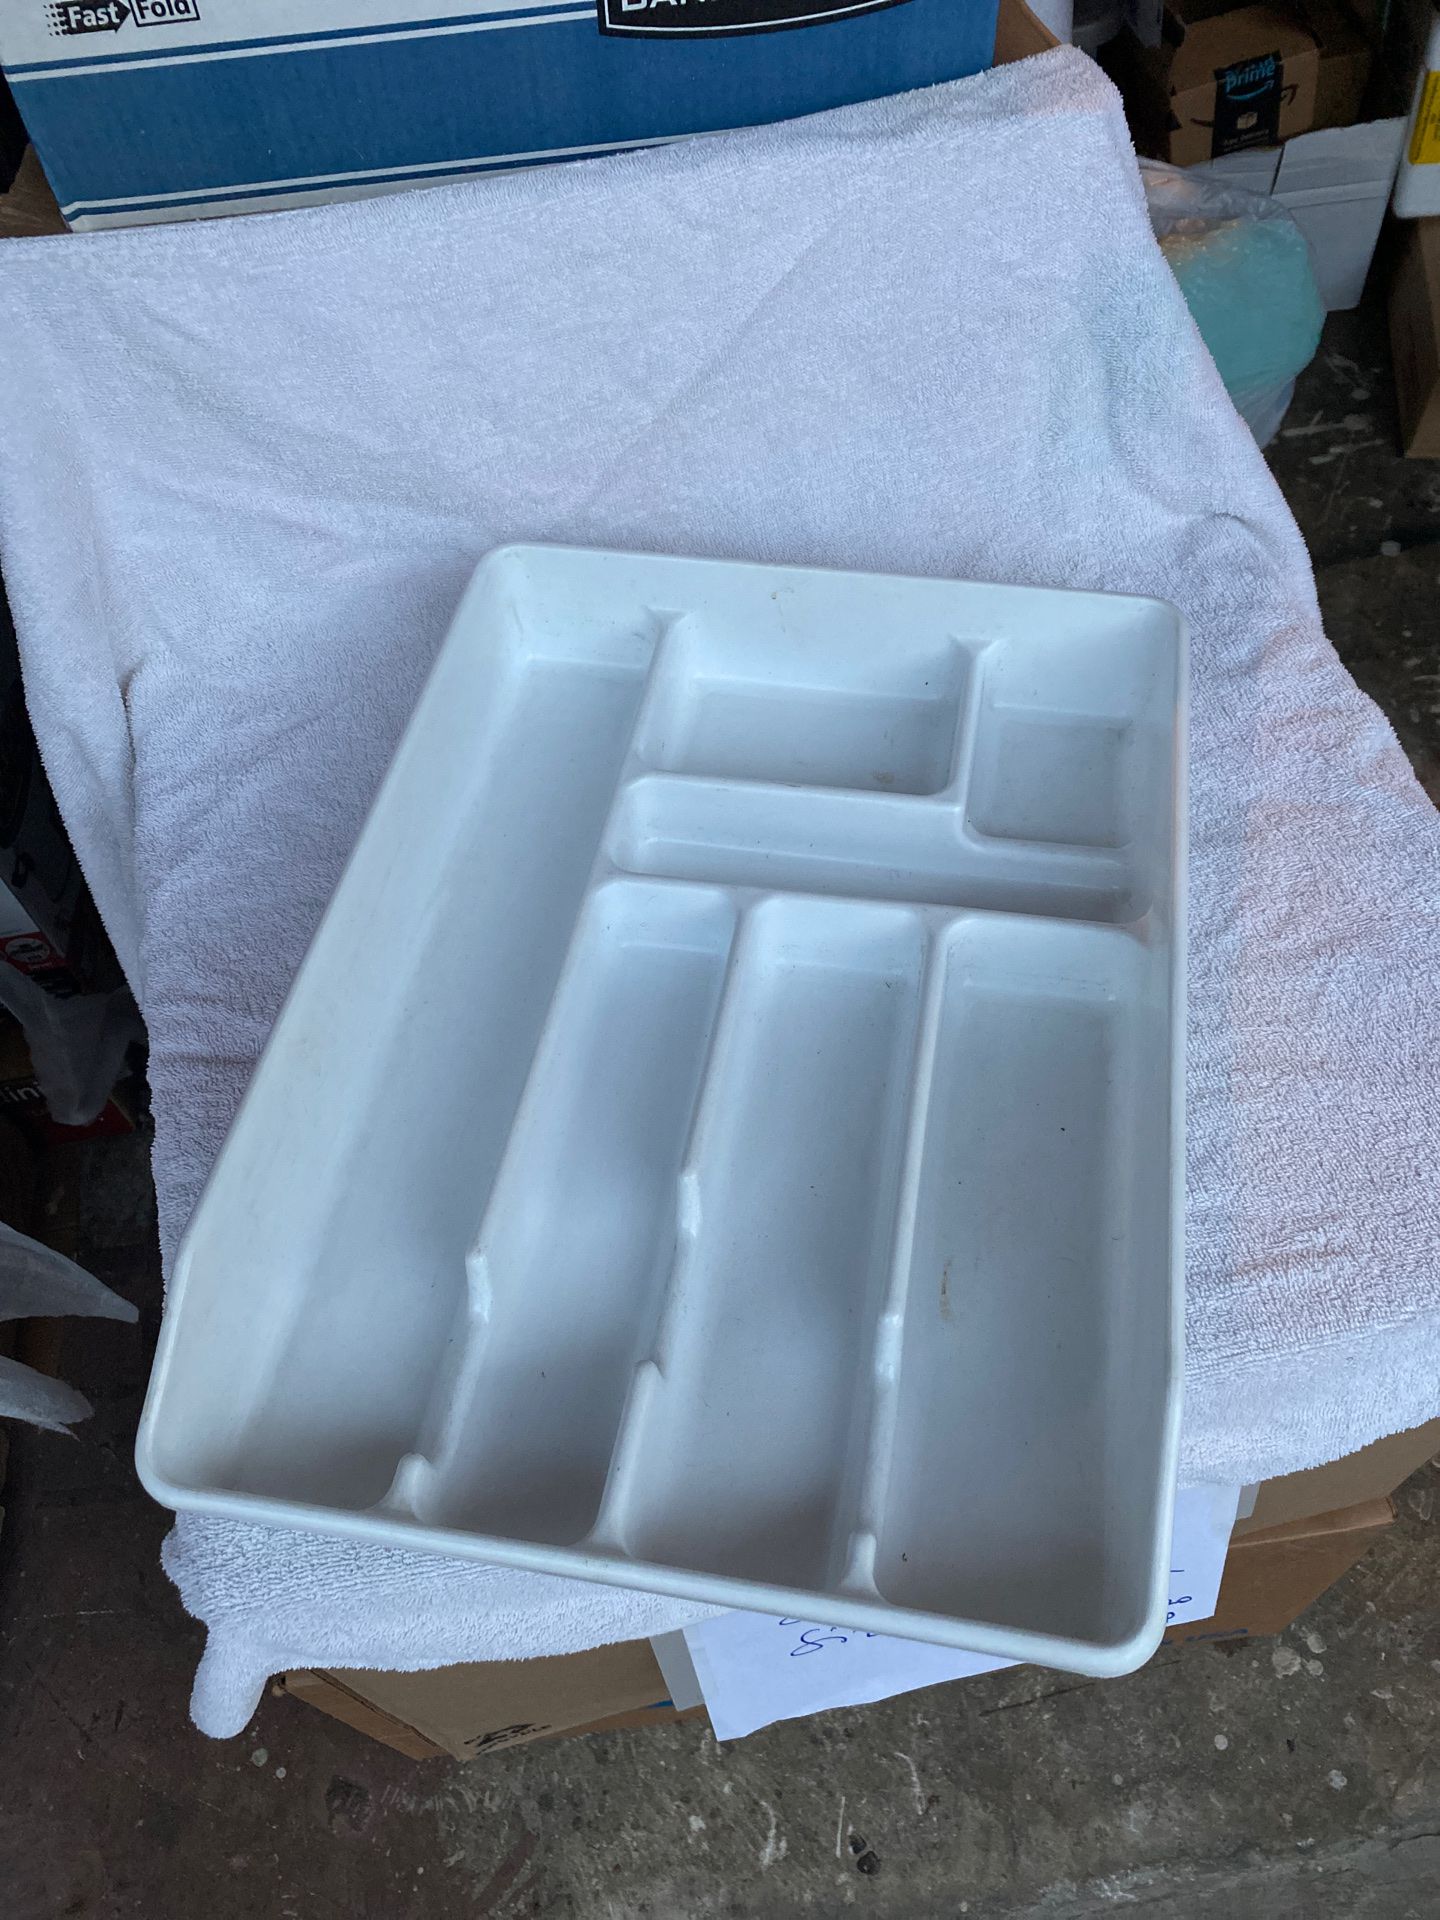 Rubbermaid plastic silverware drawer organizer